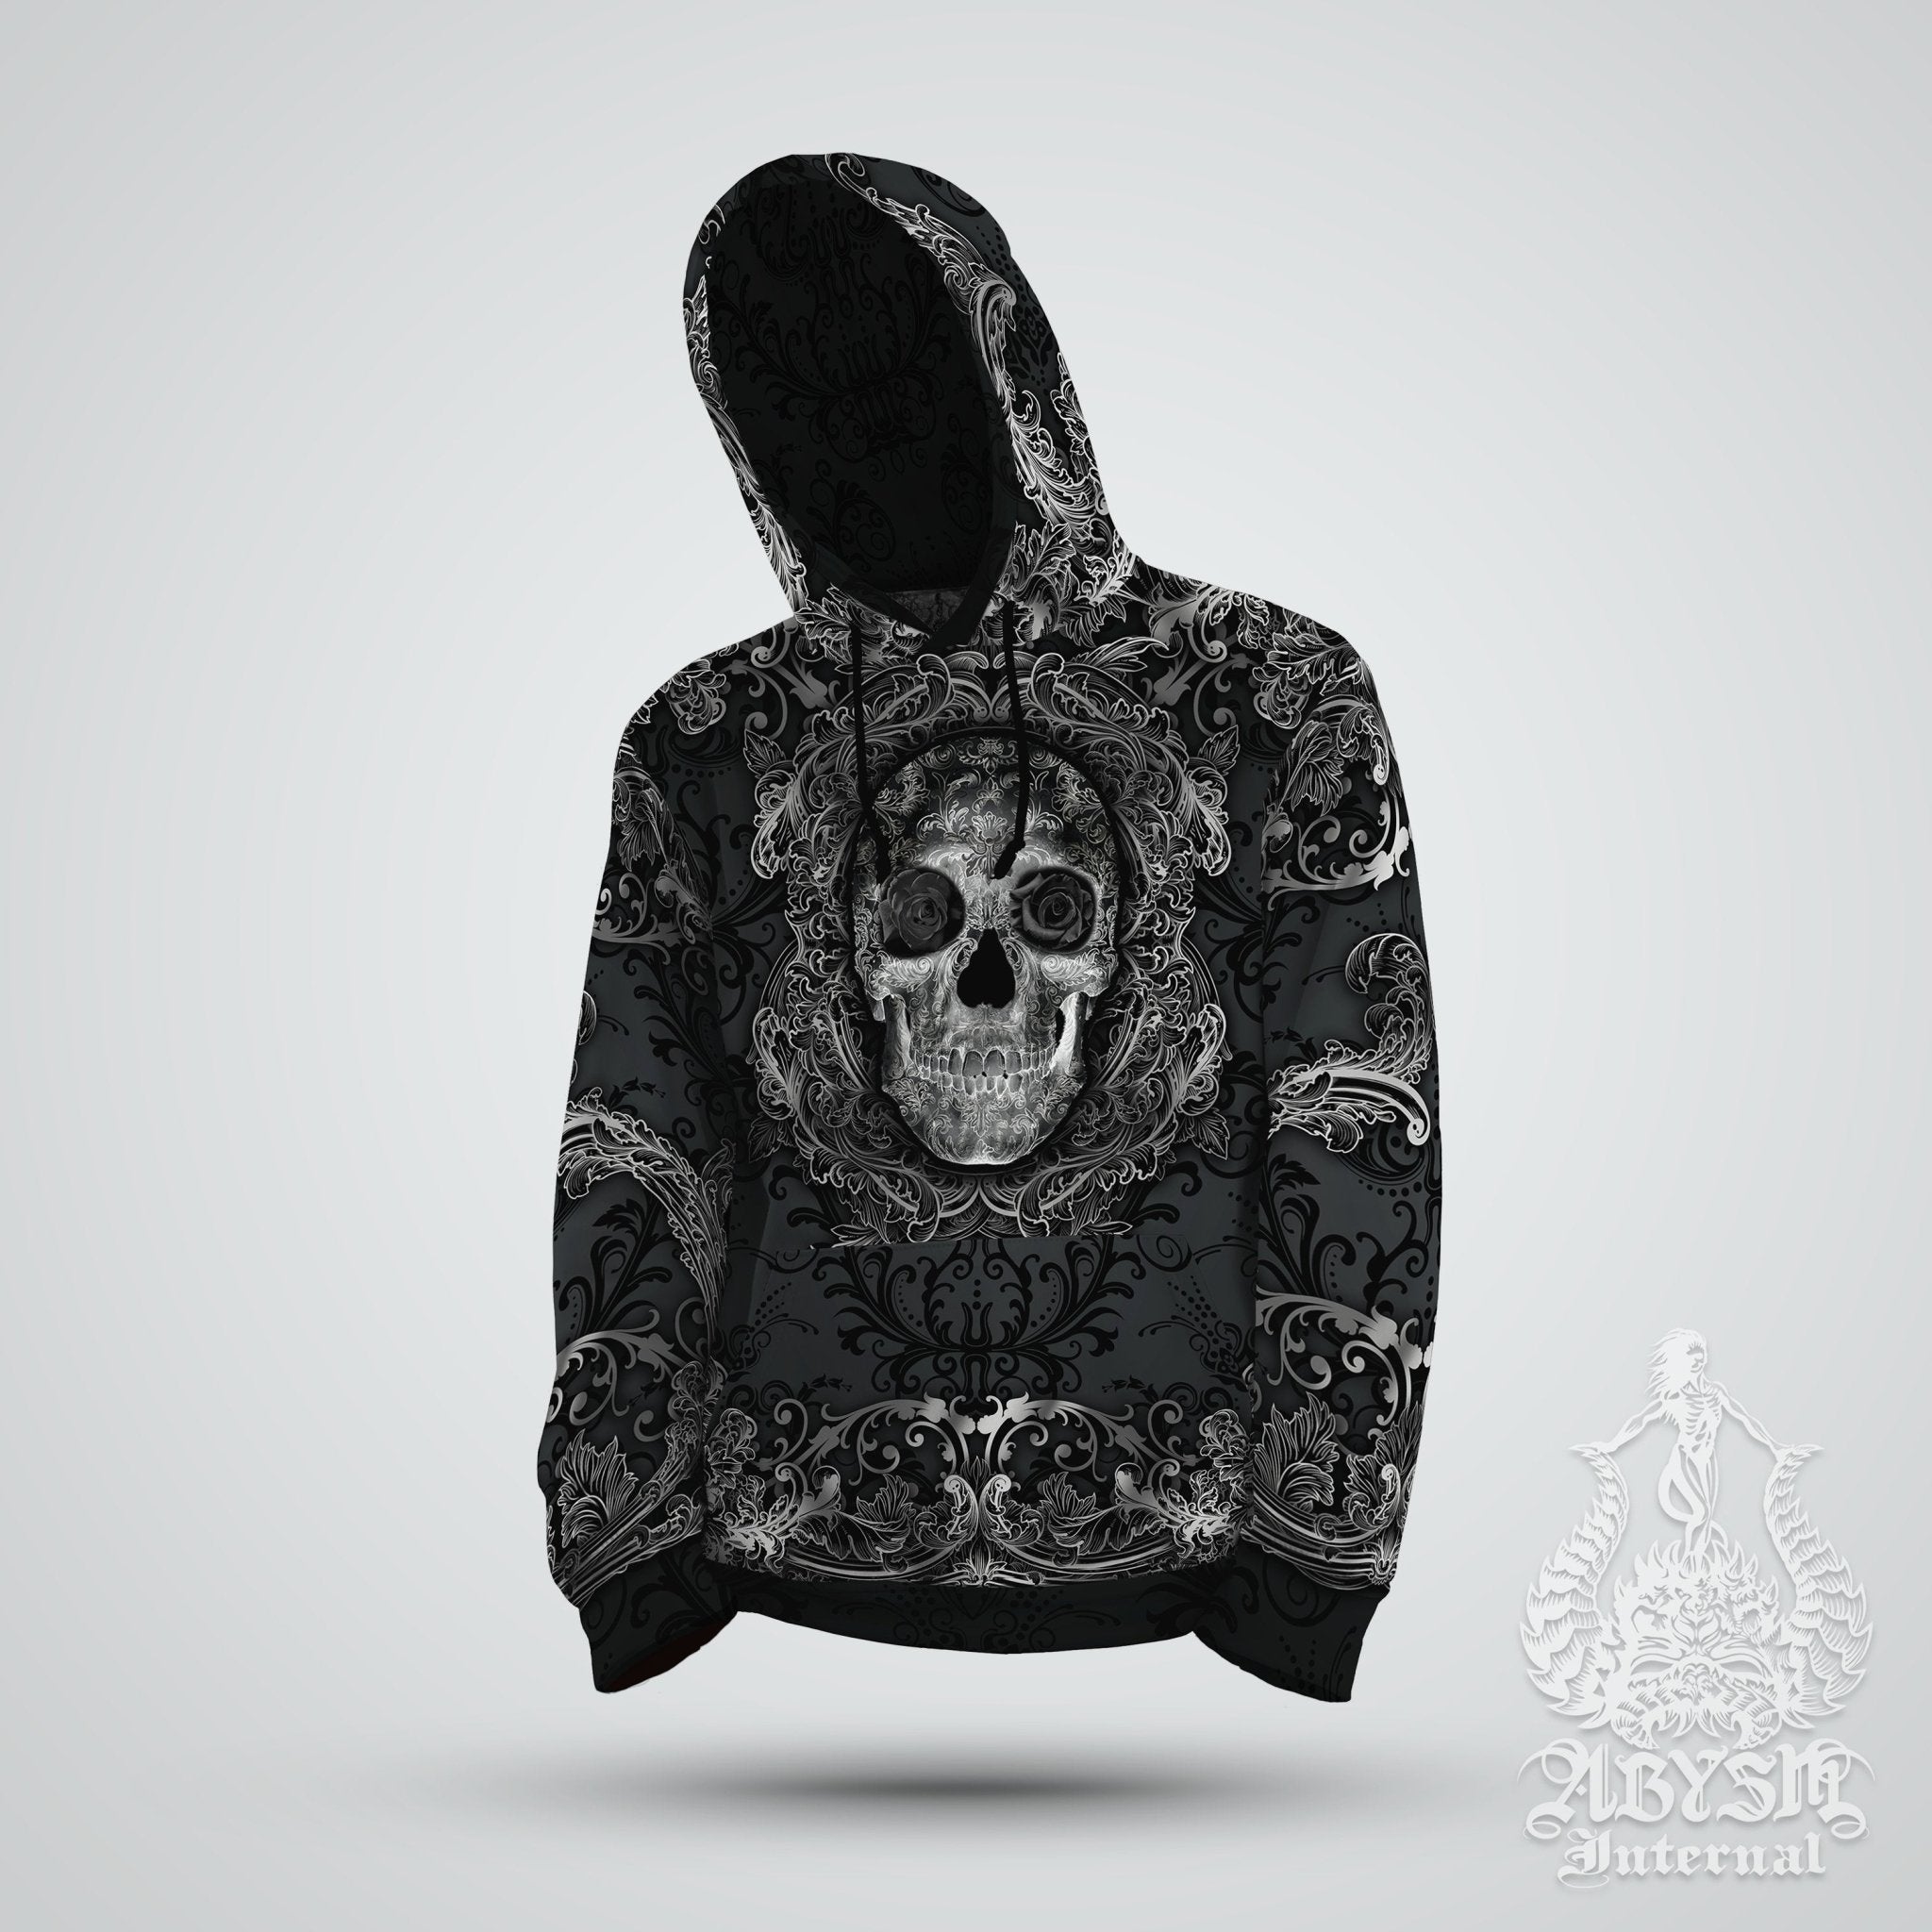 Skull Hoodie, Gothic Streetwear, Nu Goth Outfit, Alternative Clothing, Unisex - Dark - Abysm Internal